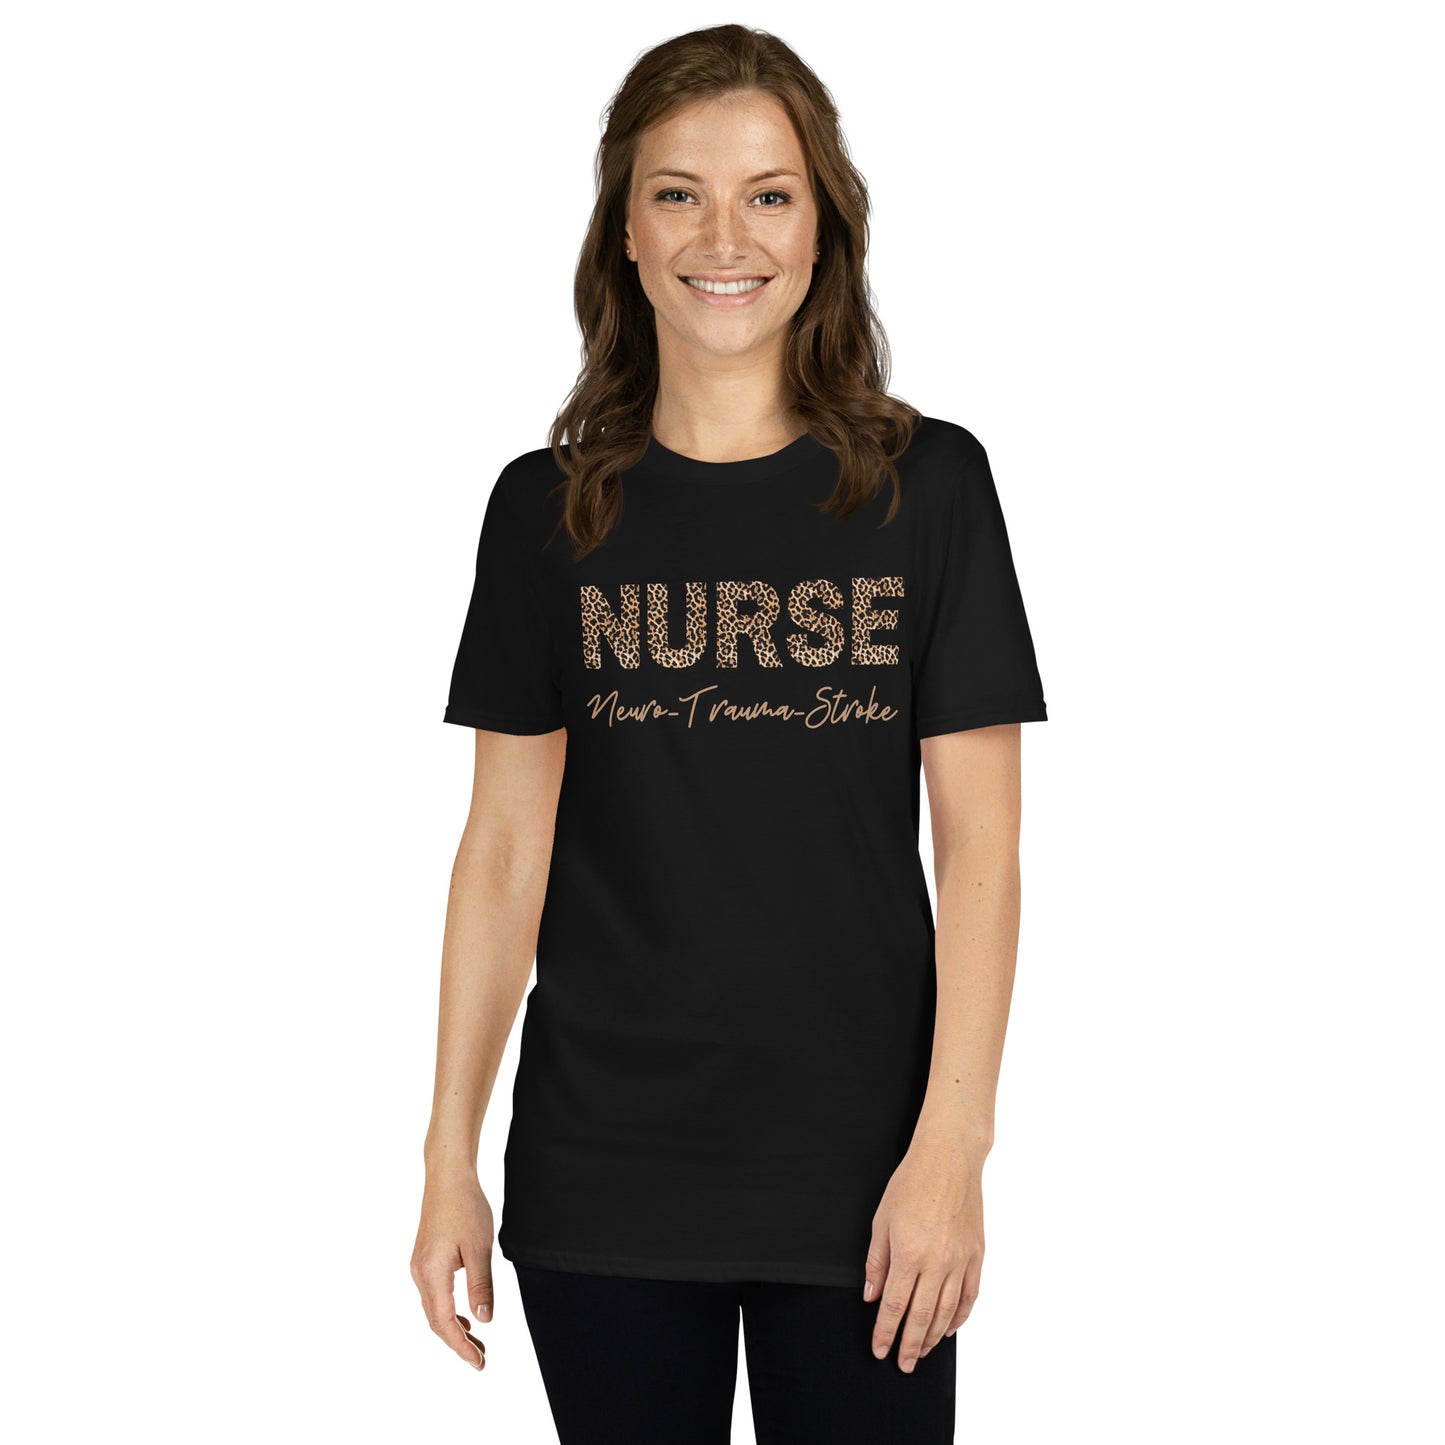 Neuro Trauma Stroke Nurse T-Shirt